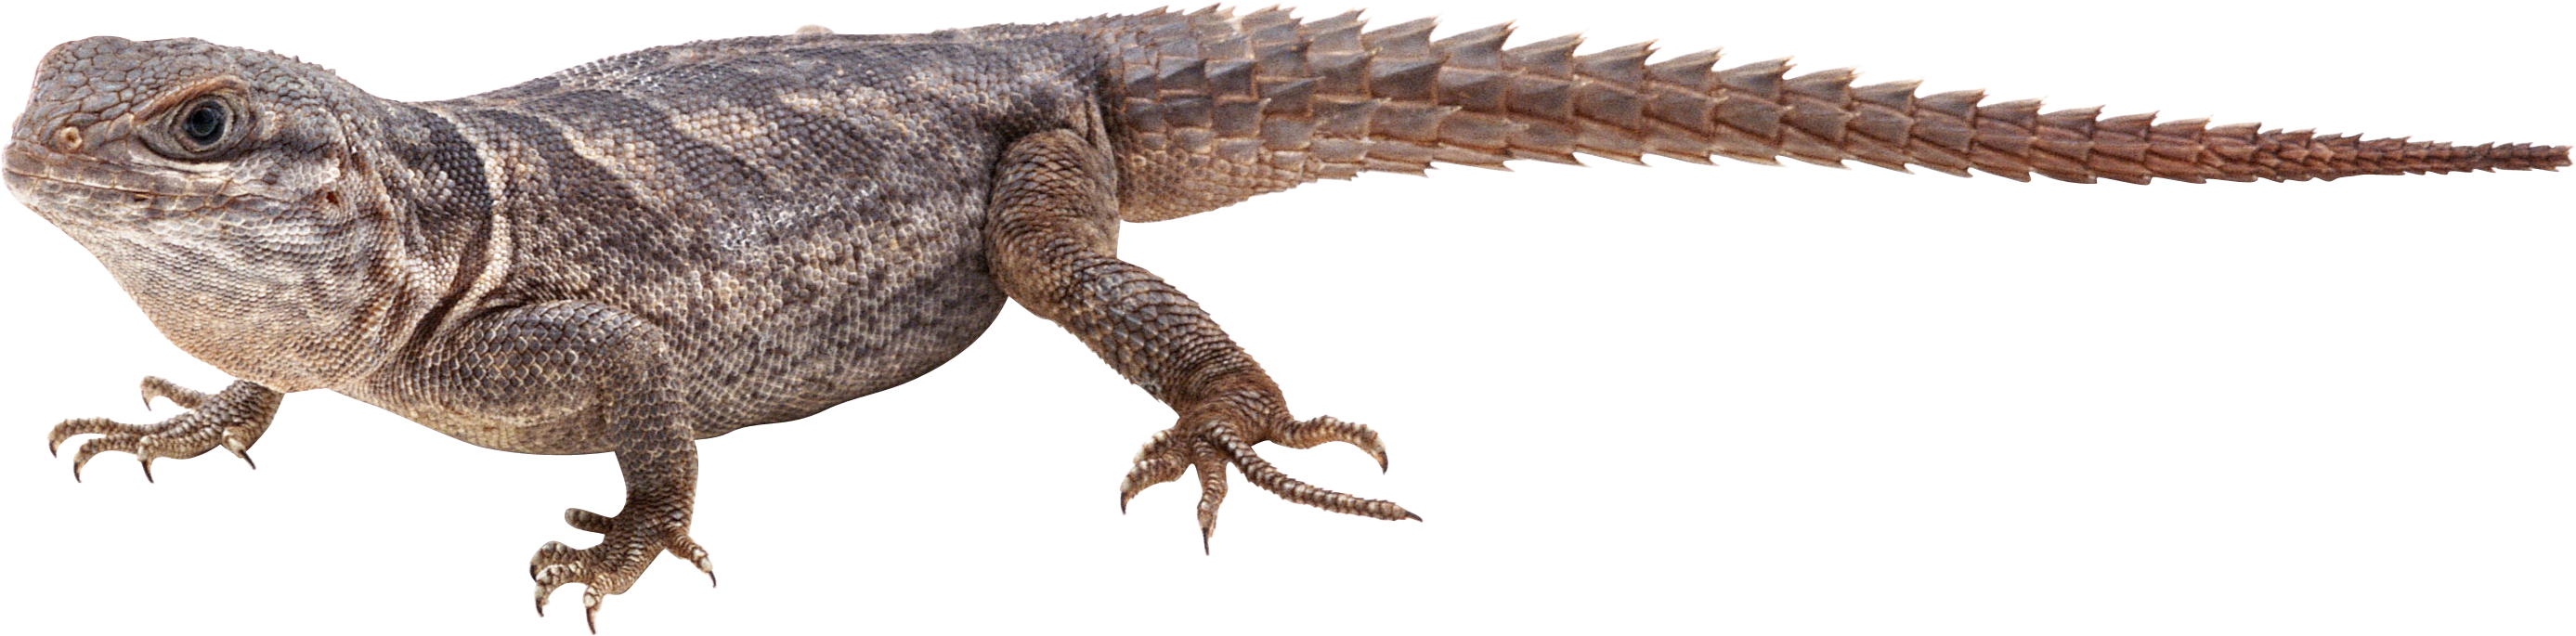 island clipart crocodile